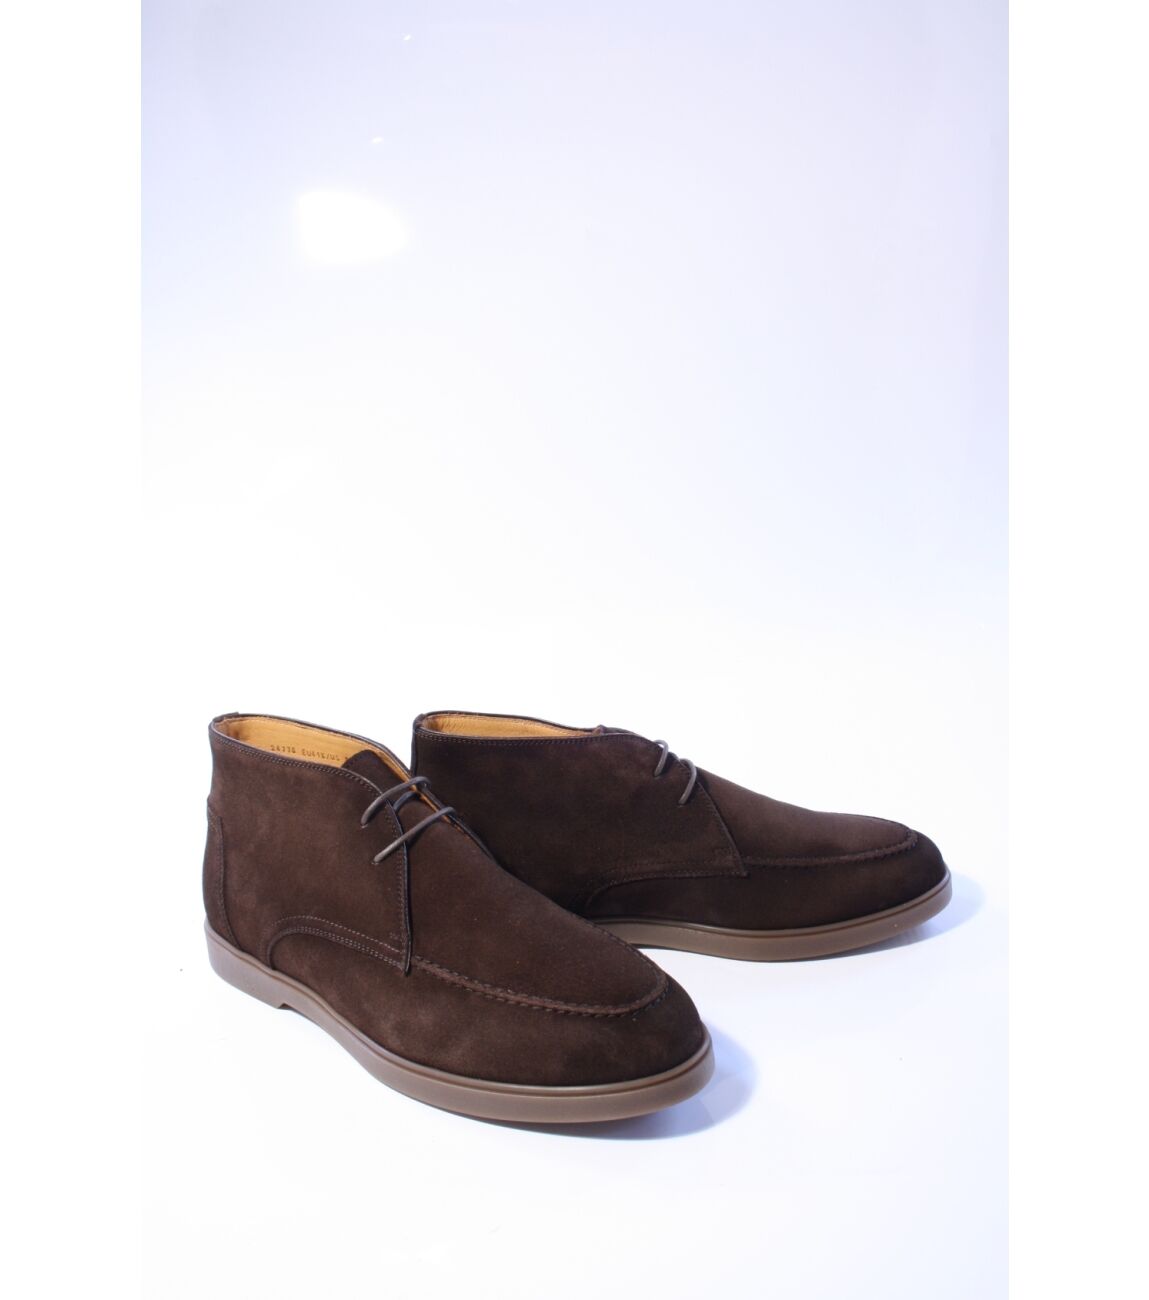 Magnanni Heren boots gekleed bruin 43